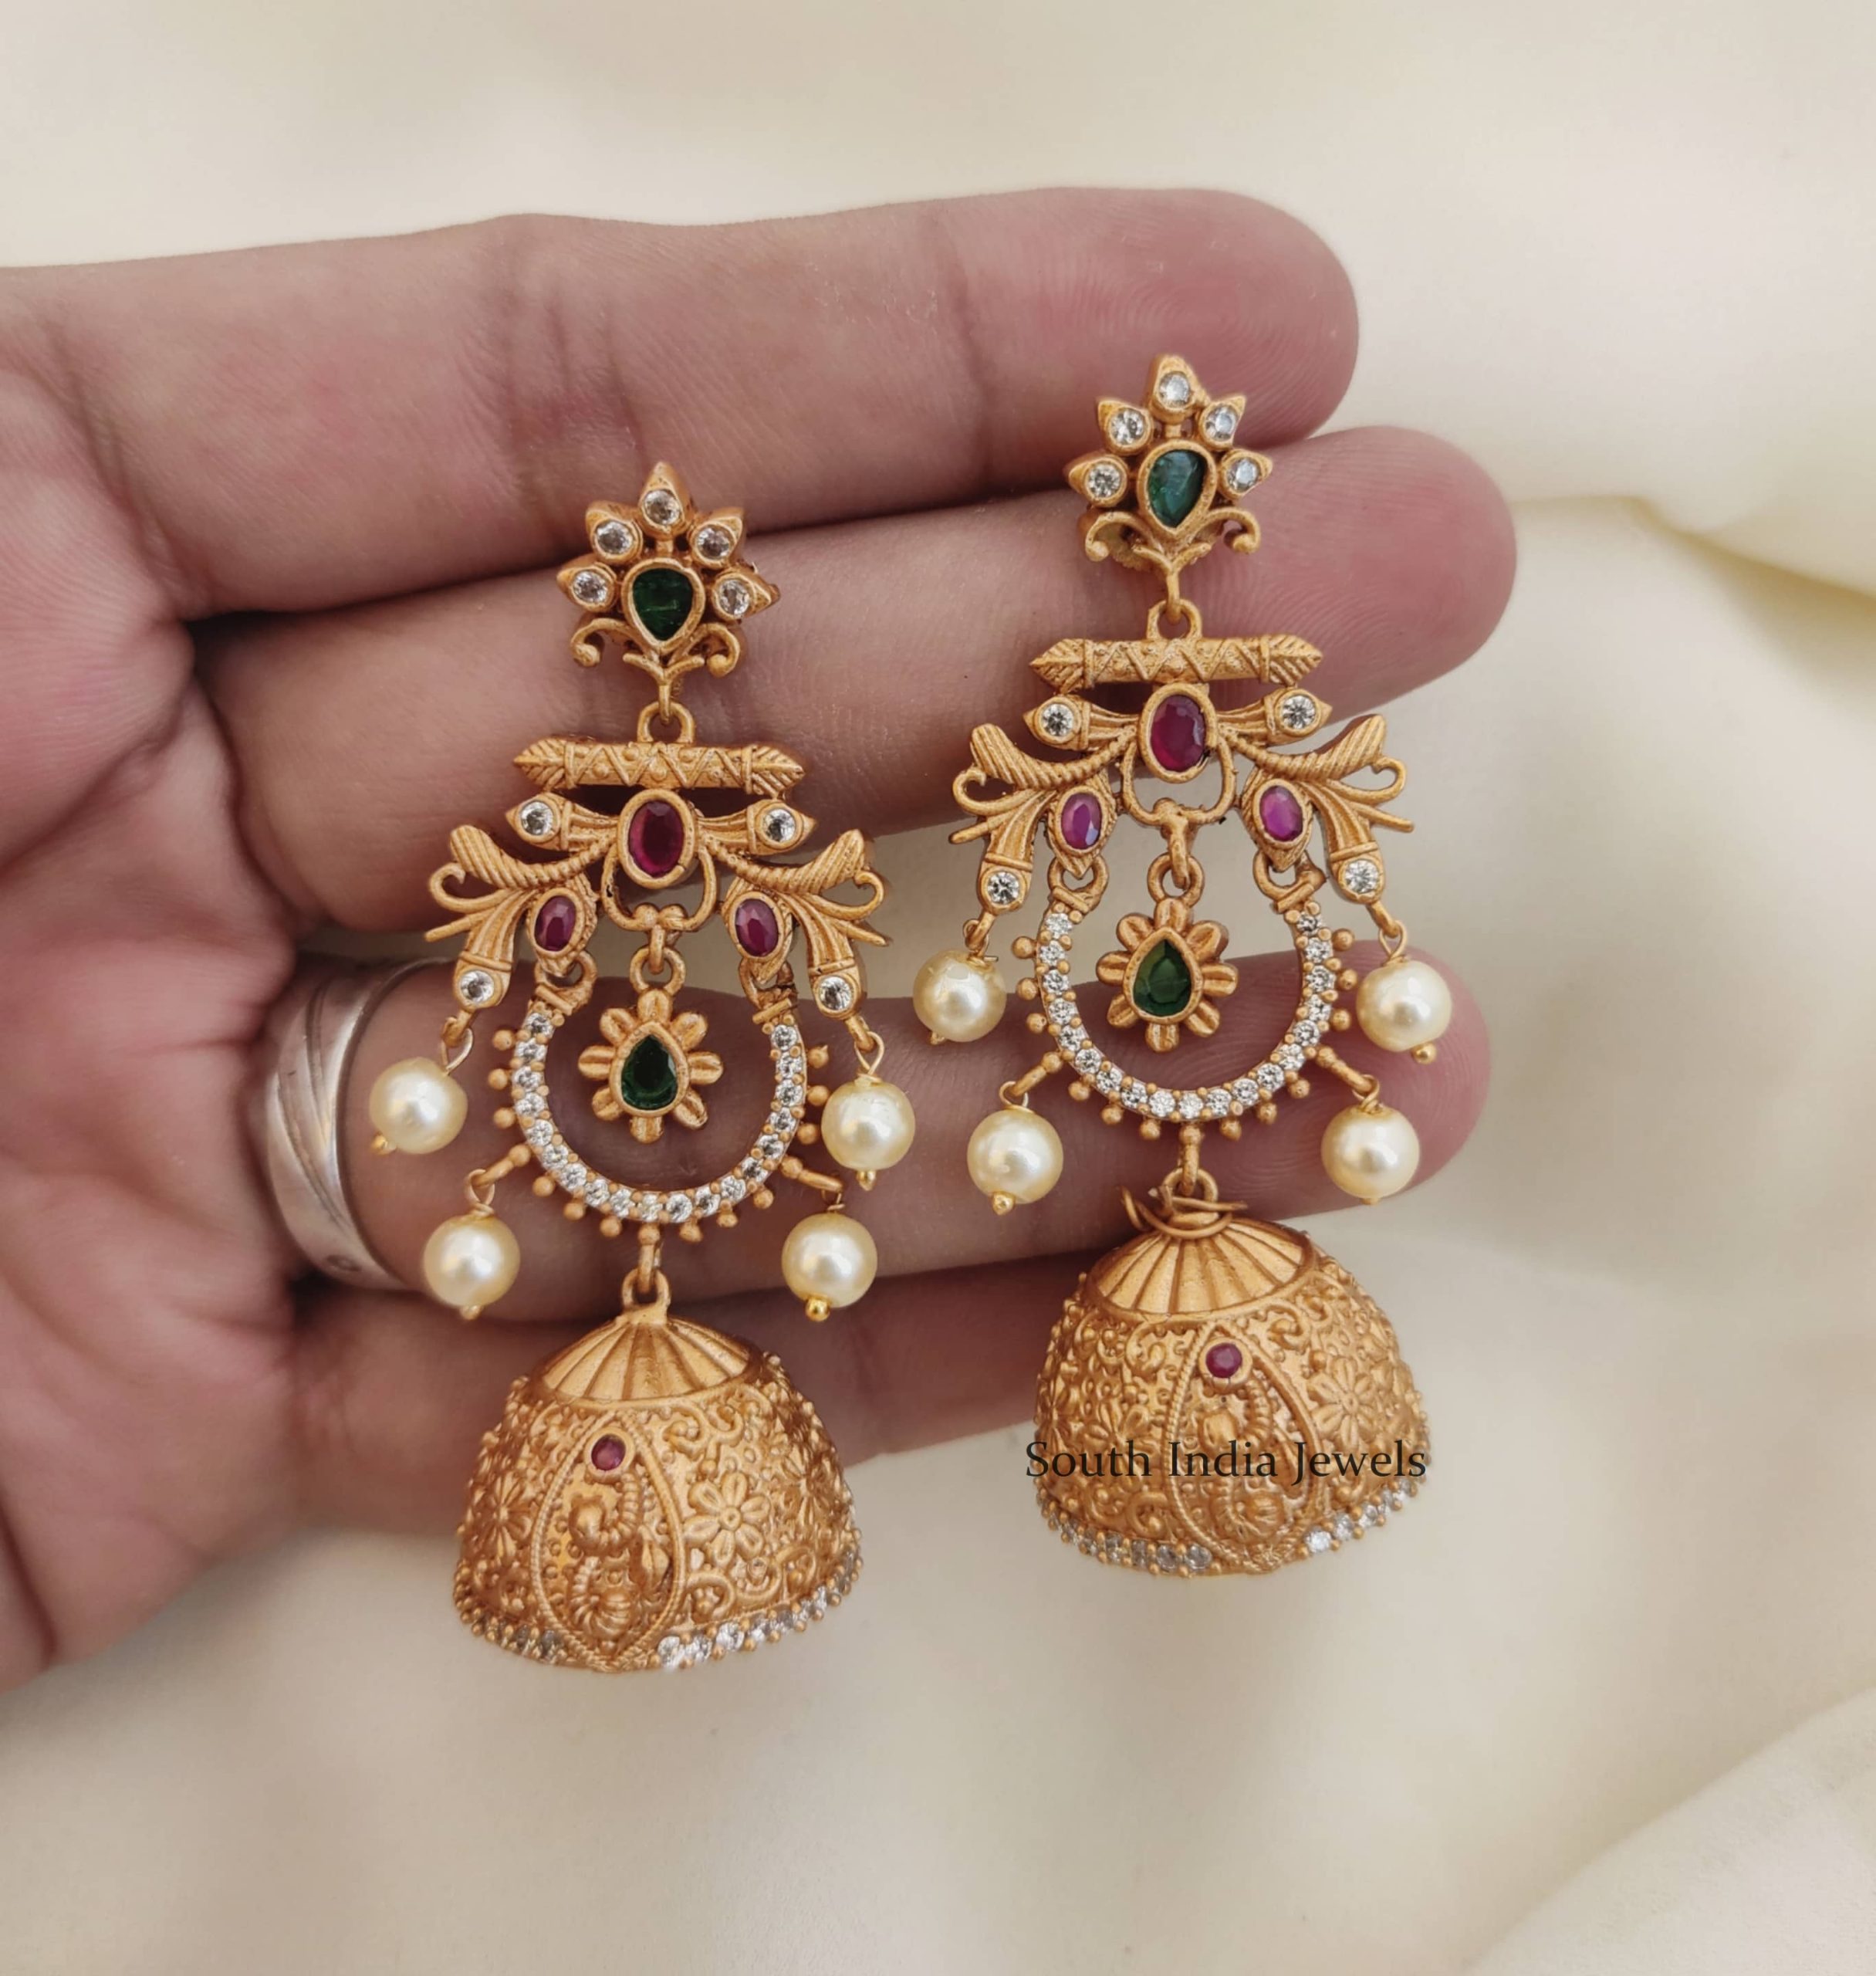 AD Stones Jhumkas - South India Jewels